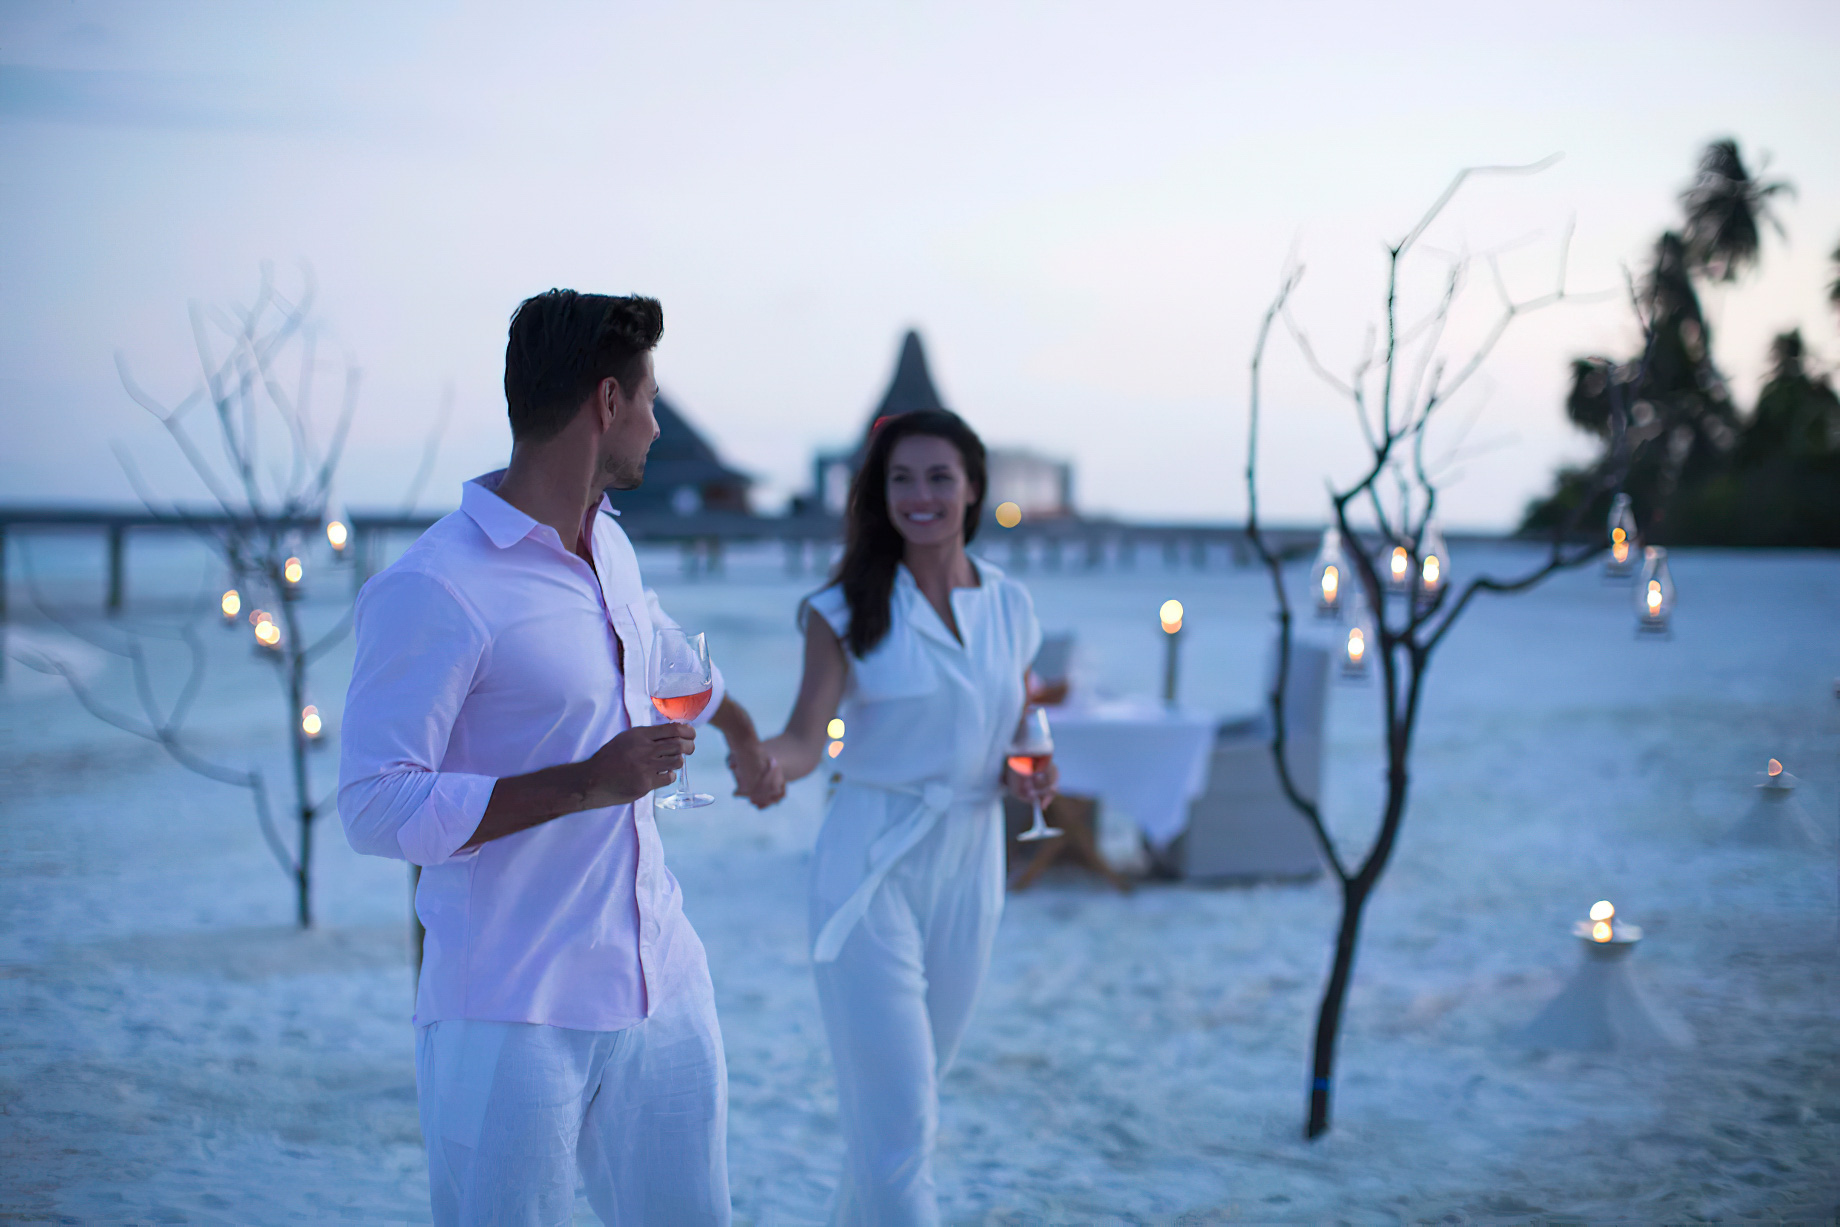 Anantara Kihavah Maldives Villas Resort – Baa Atoll, Maldives – Beach Walk Sunset